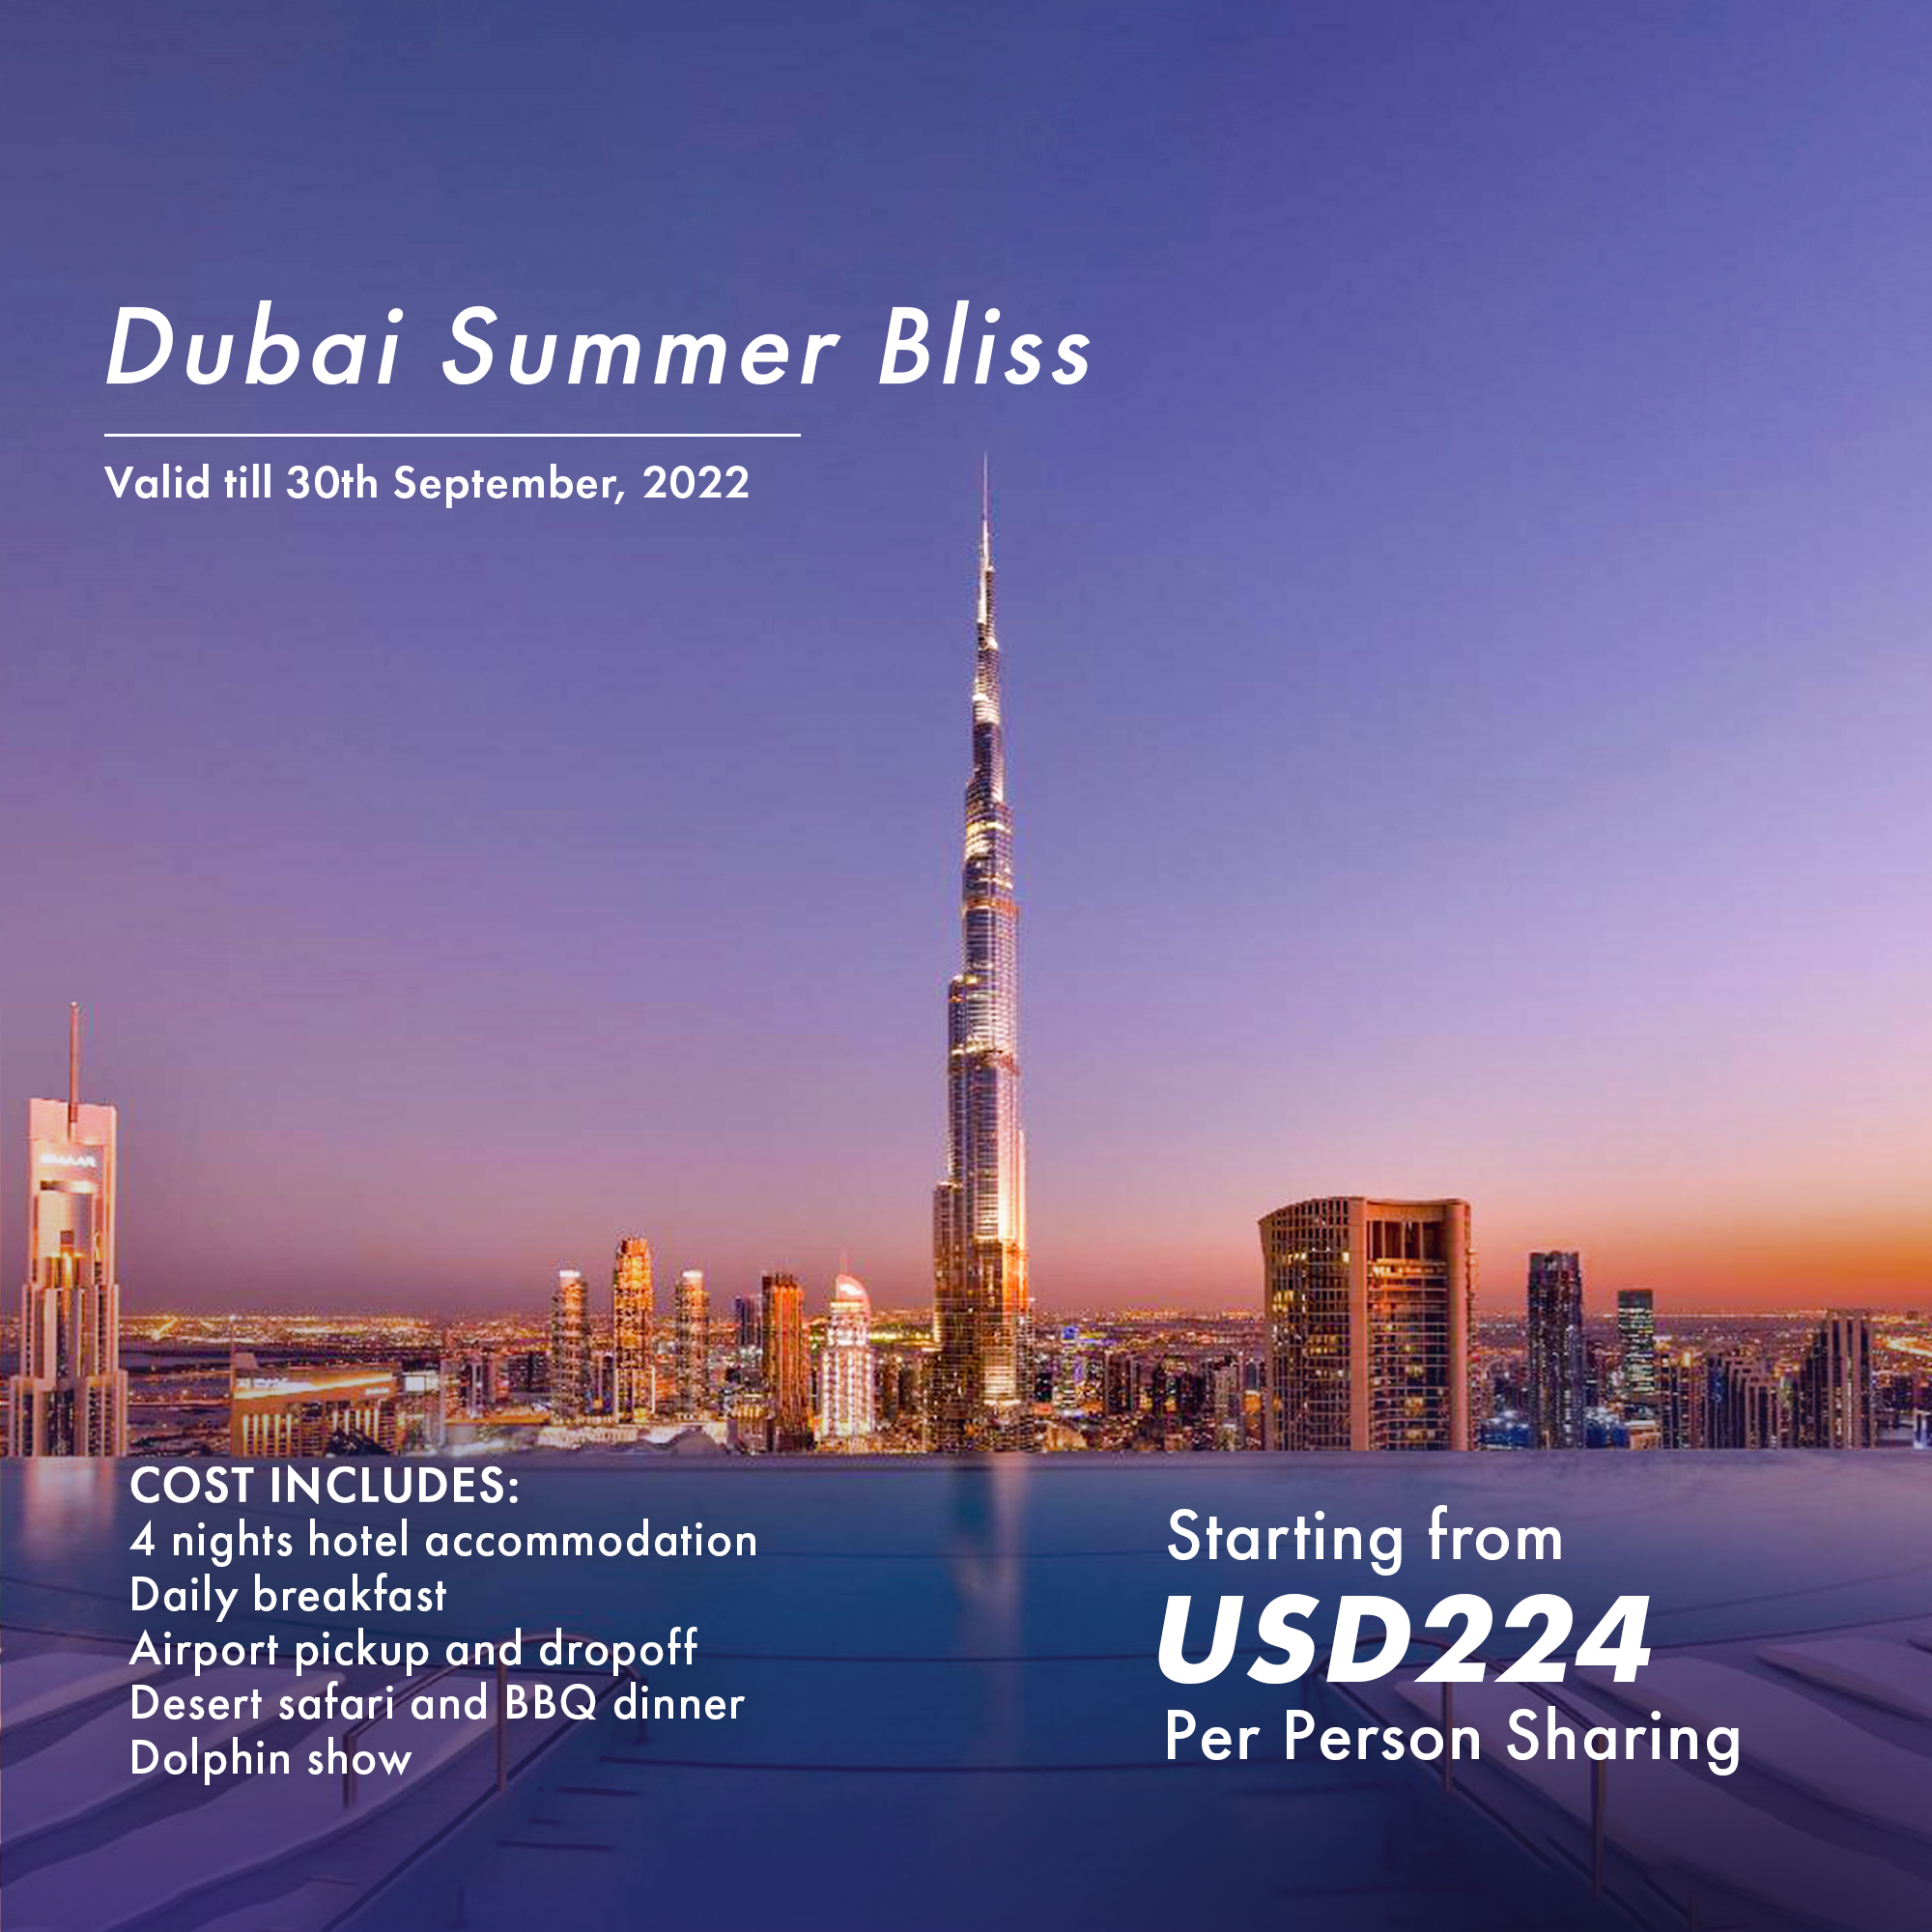 Dubai Summer Bliss